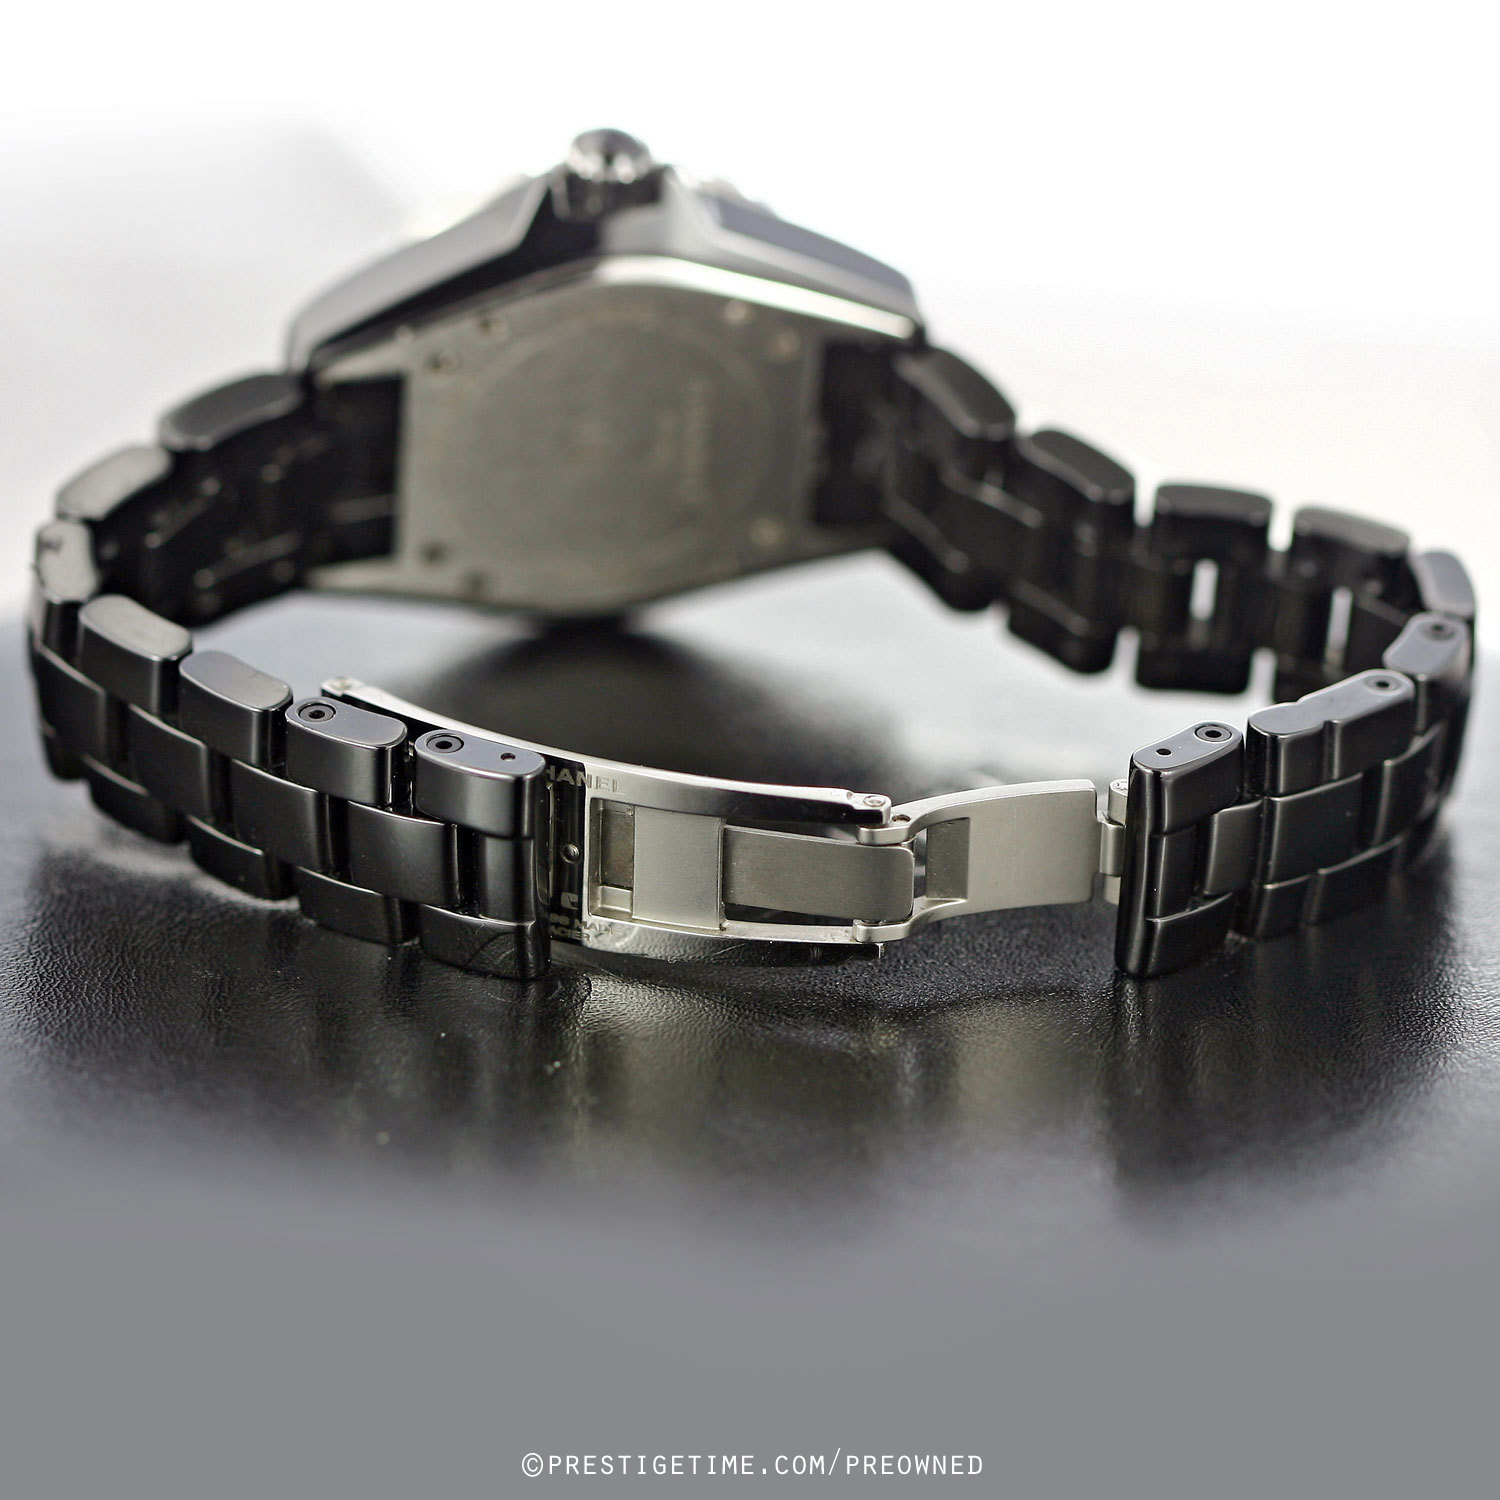 Chanel Black J12 Ceramic and Diamonds 33mm Quartz Watch-H0949